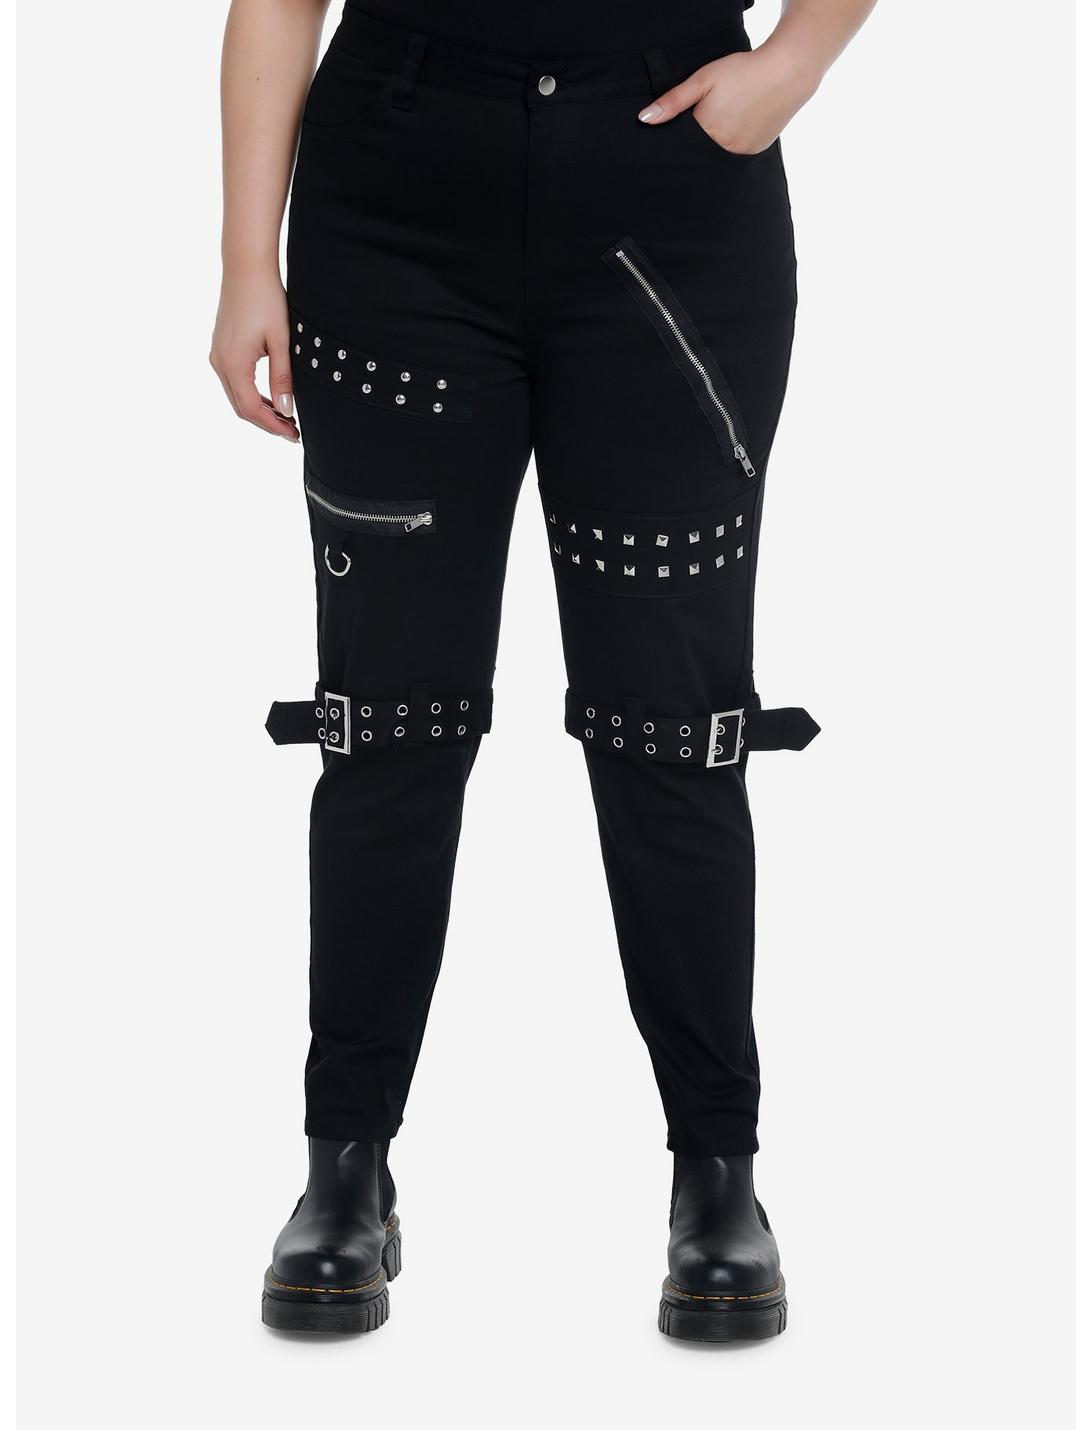 Black Grommet Zipper Super Skinny Jeans Plus Size | Hot Topic